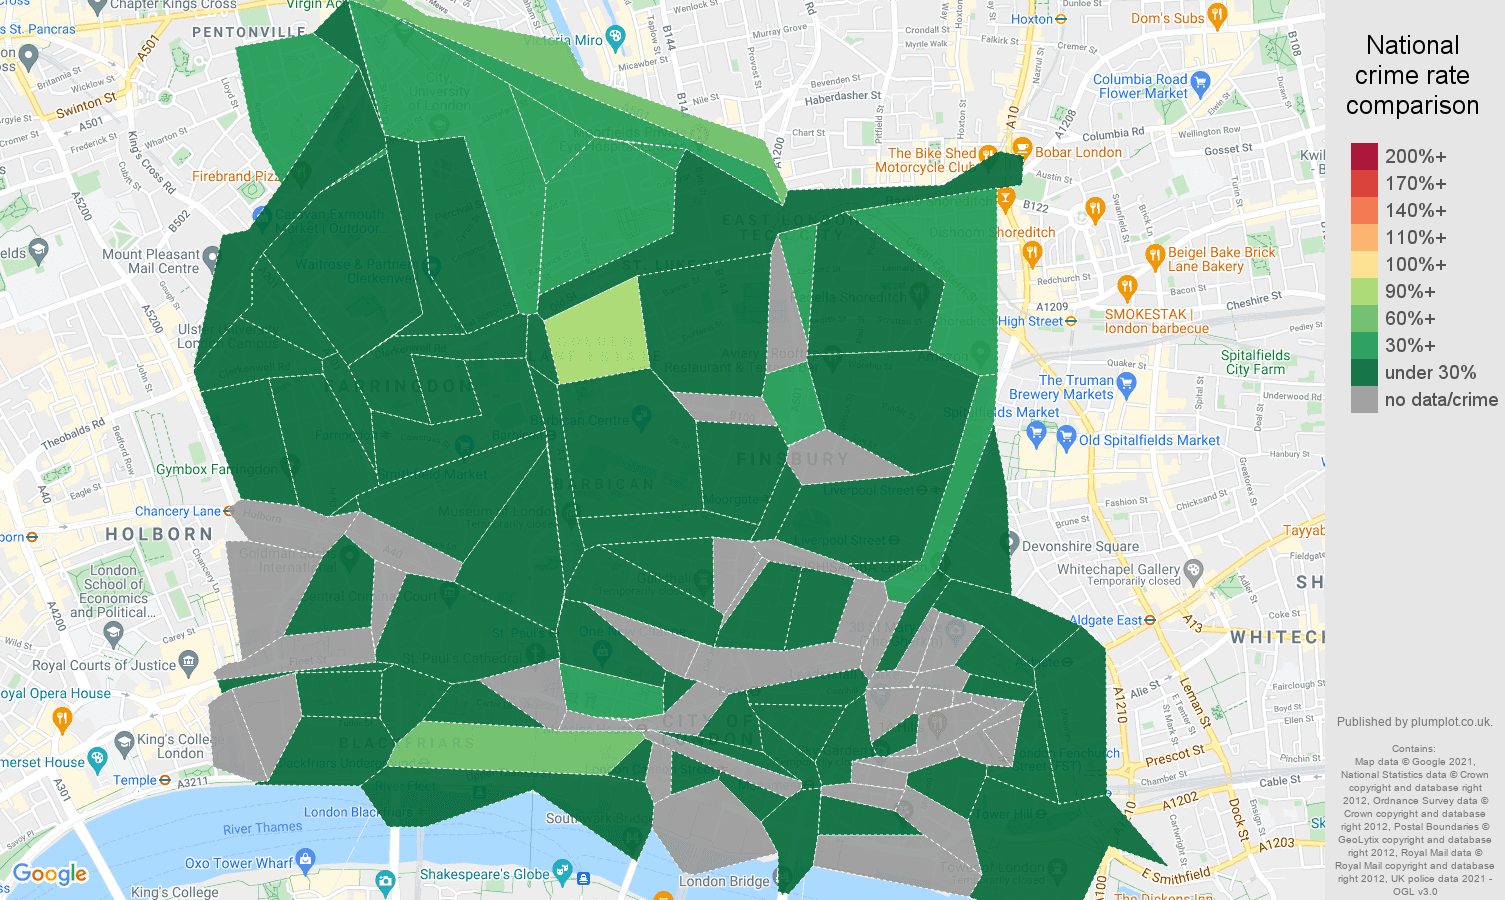 East Central London criminal damage and arson crime rate comparison map